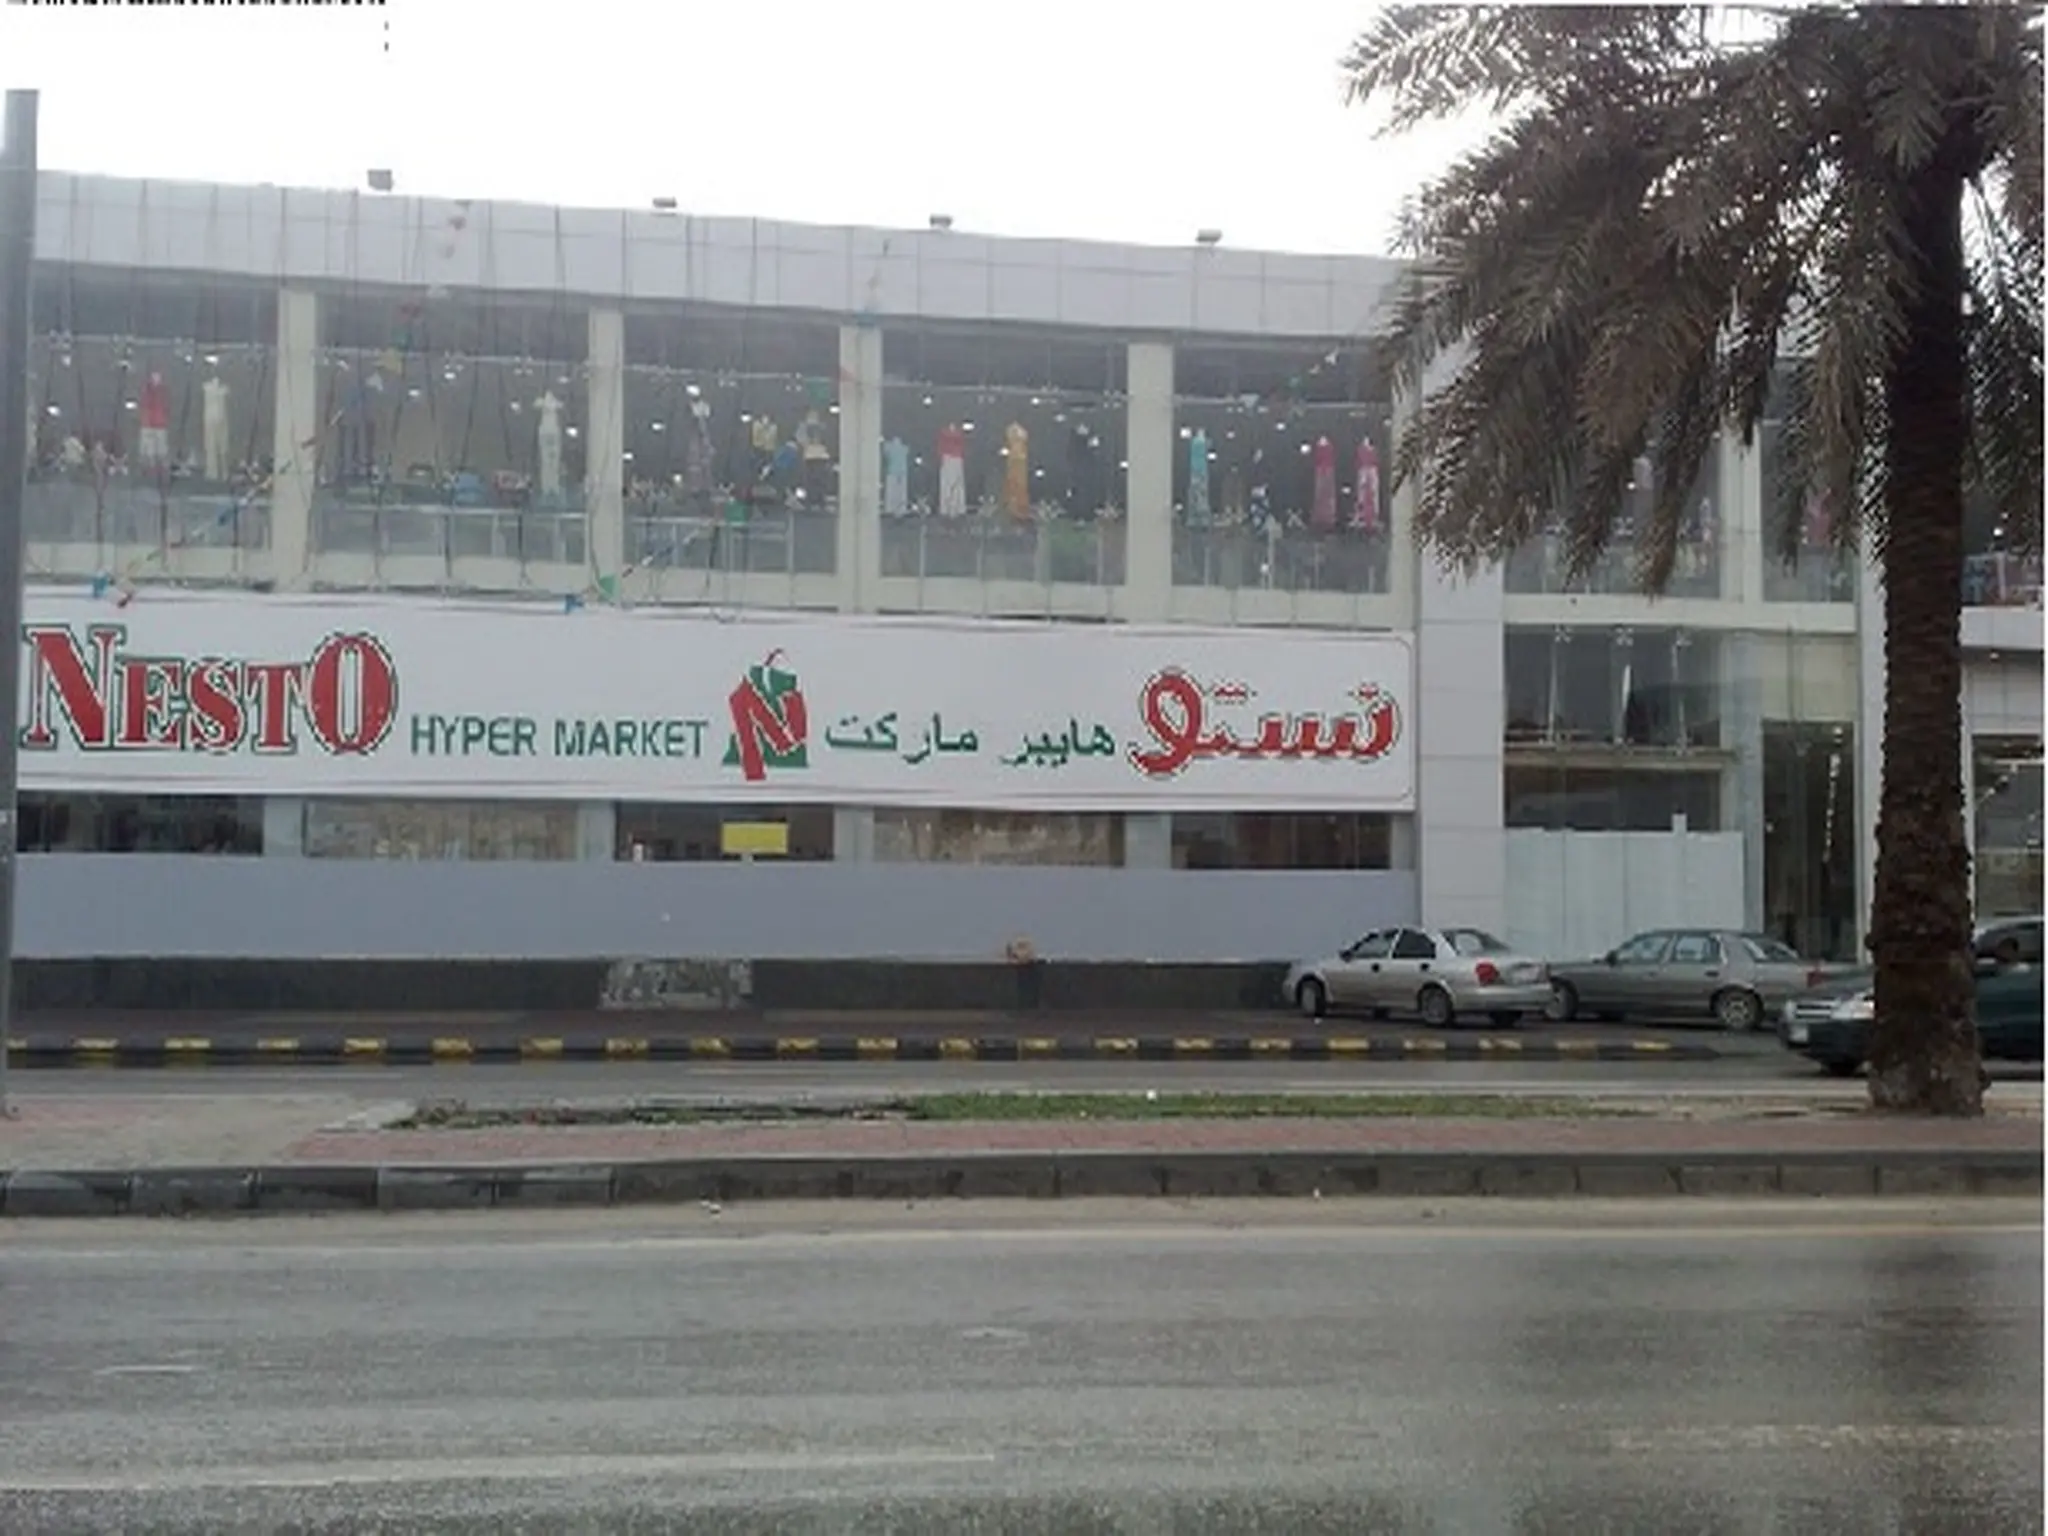 The termination date of Nesto Hypermarket UAE offers